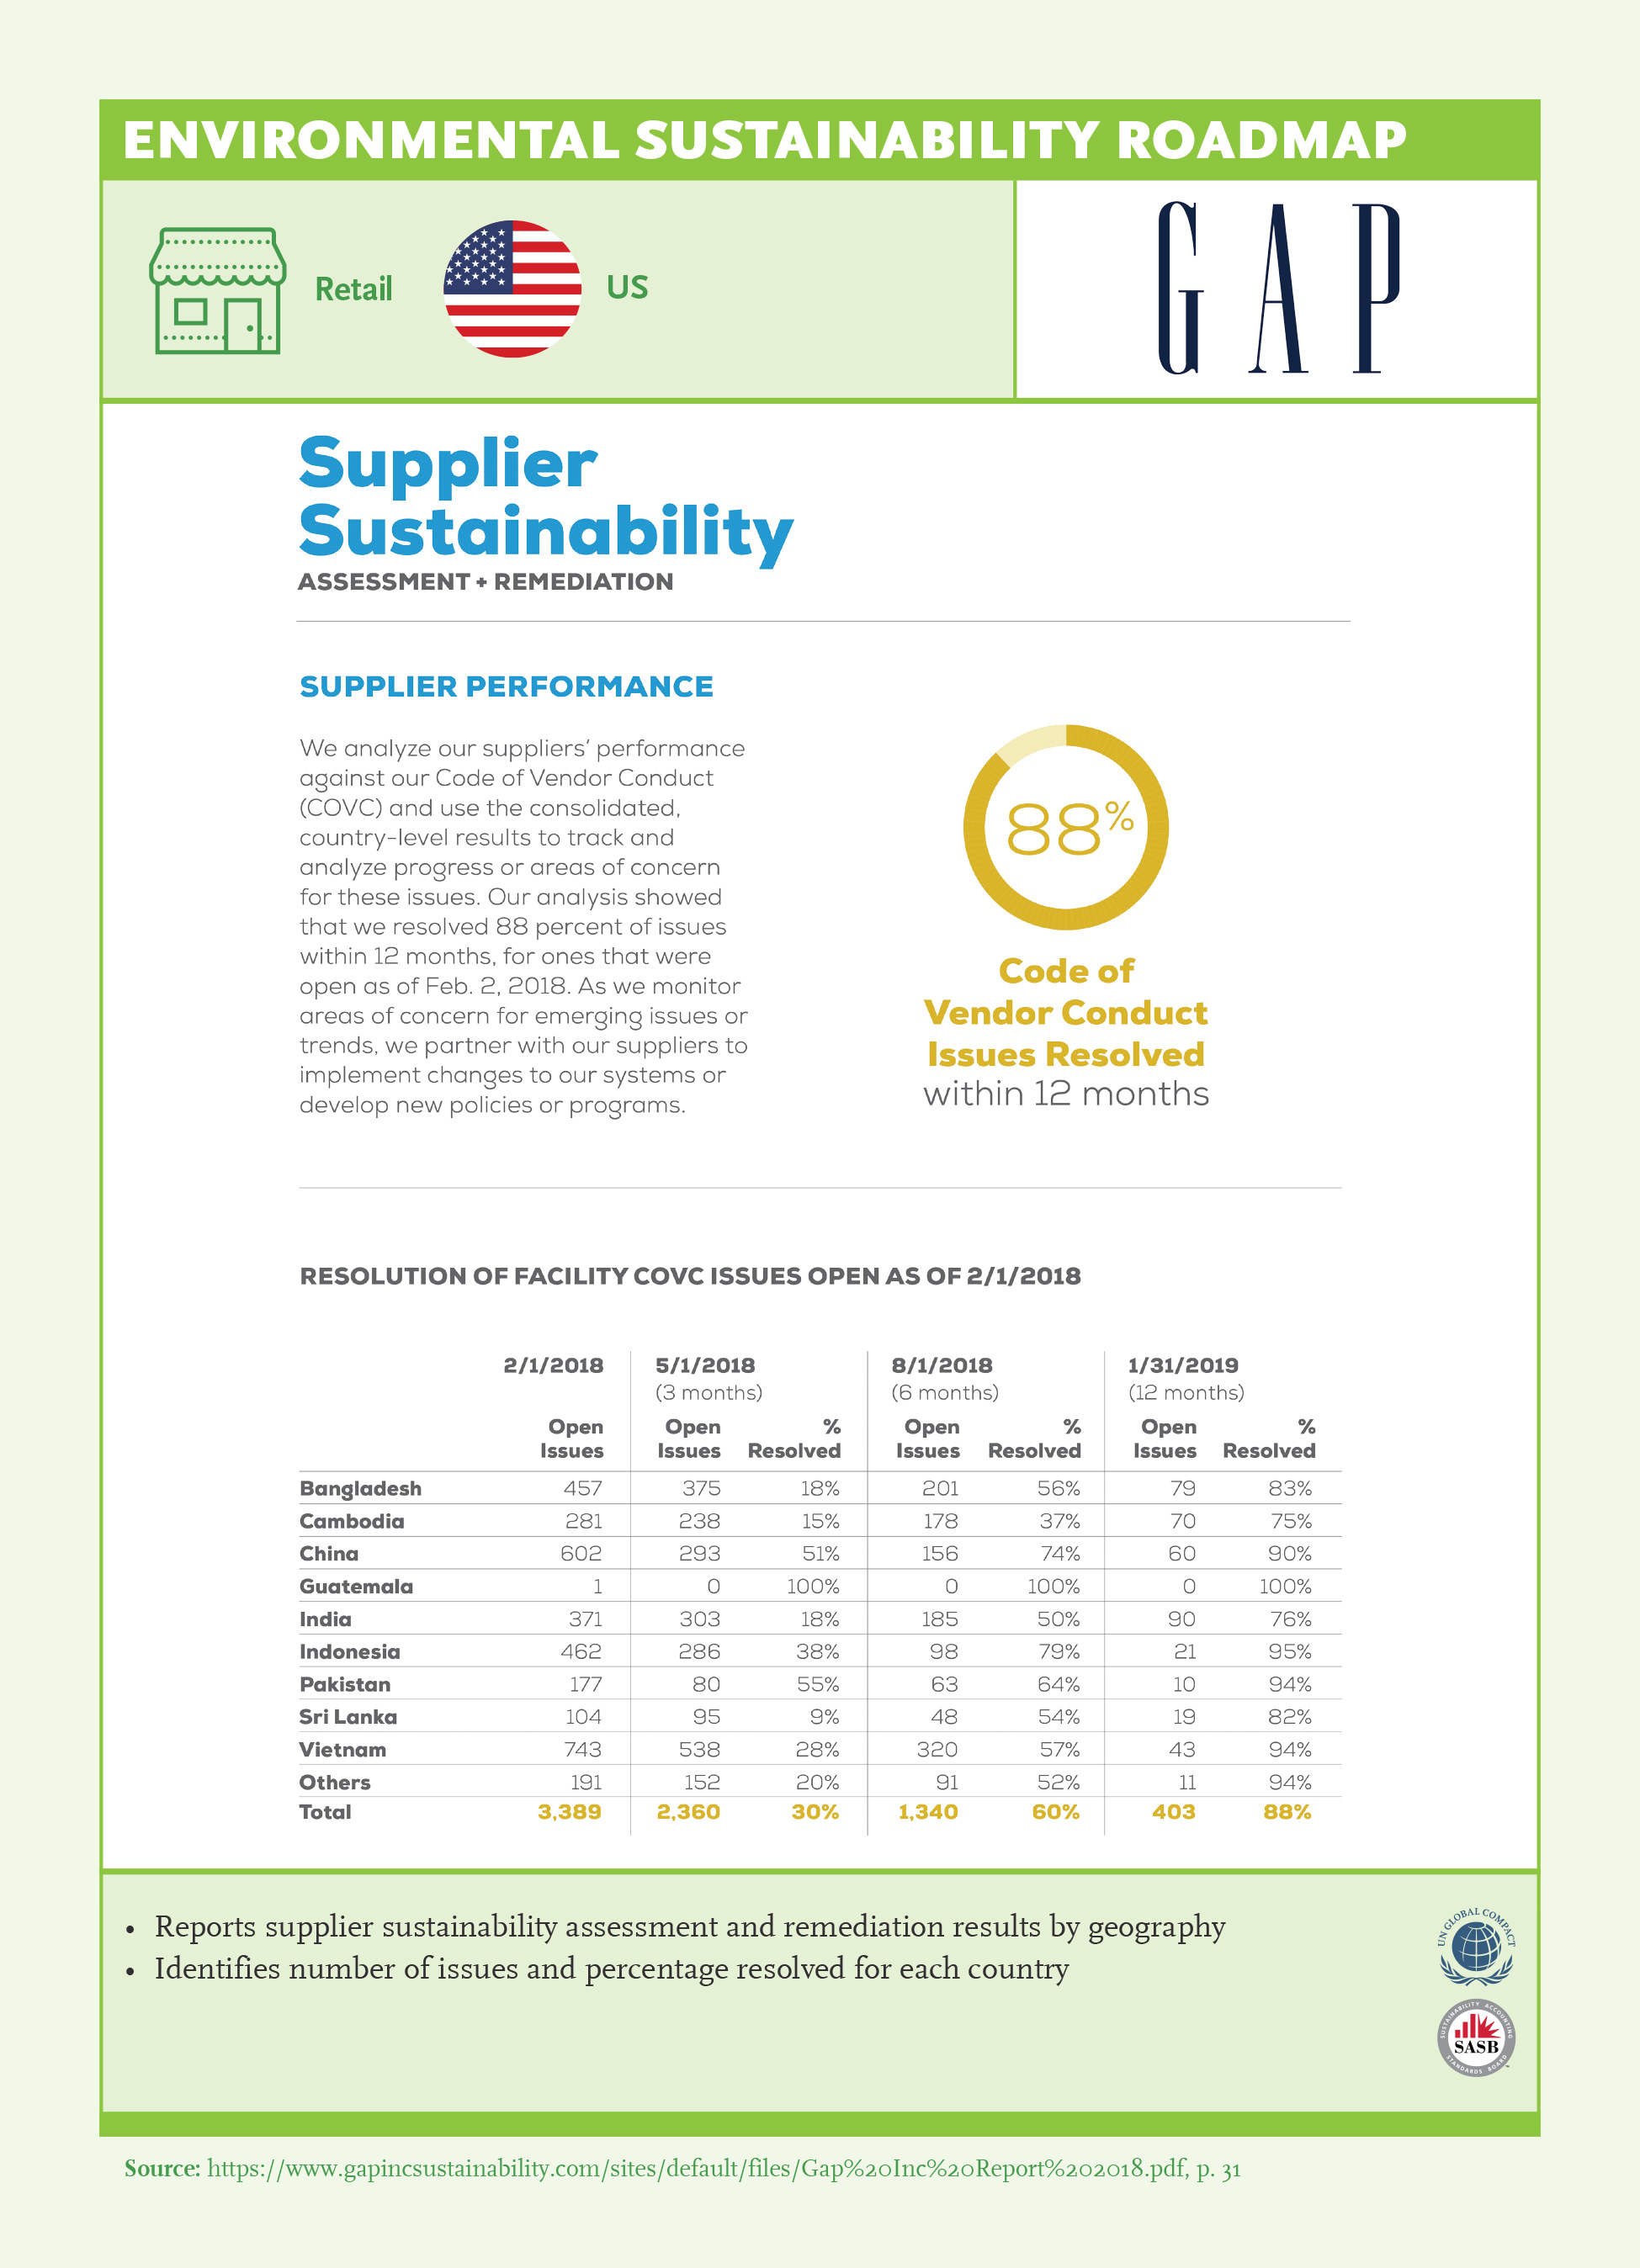 Environmental Sustainability Roadmap: Gap Inc